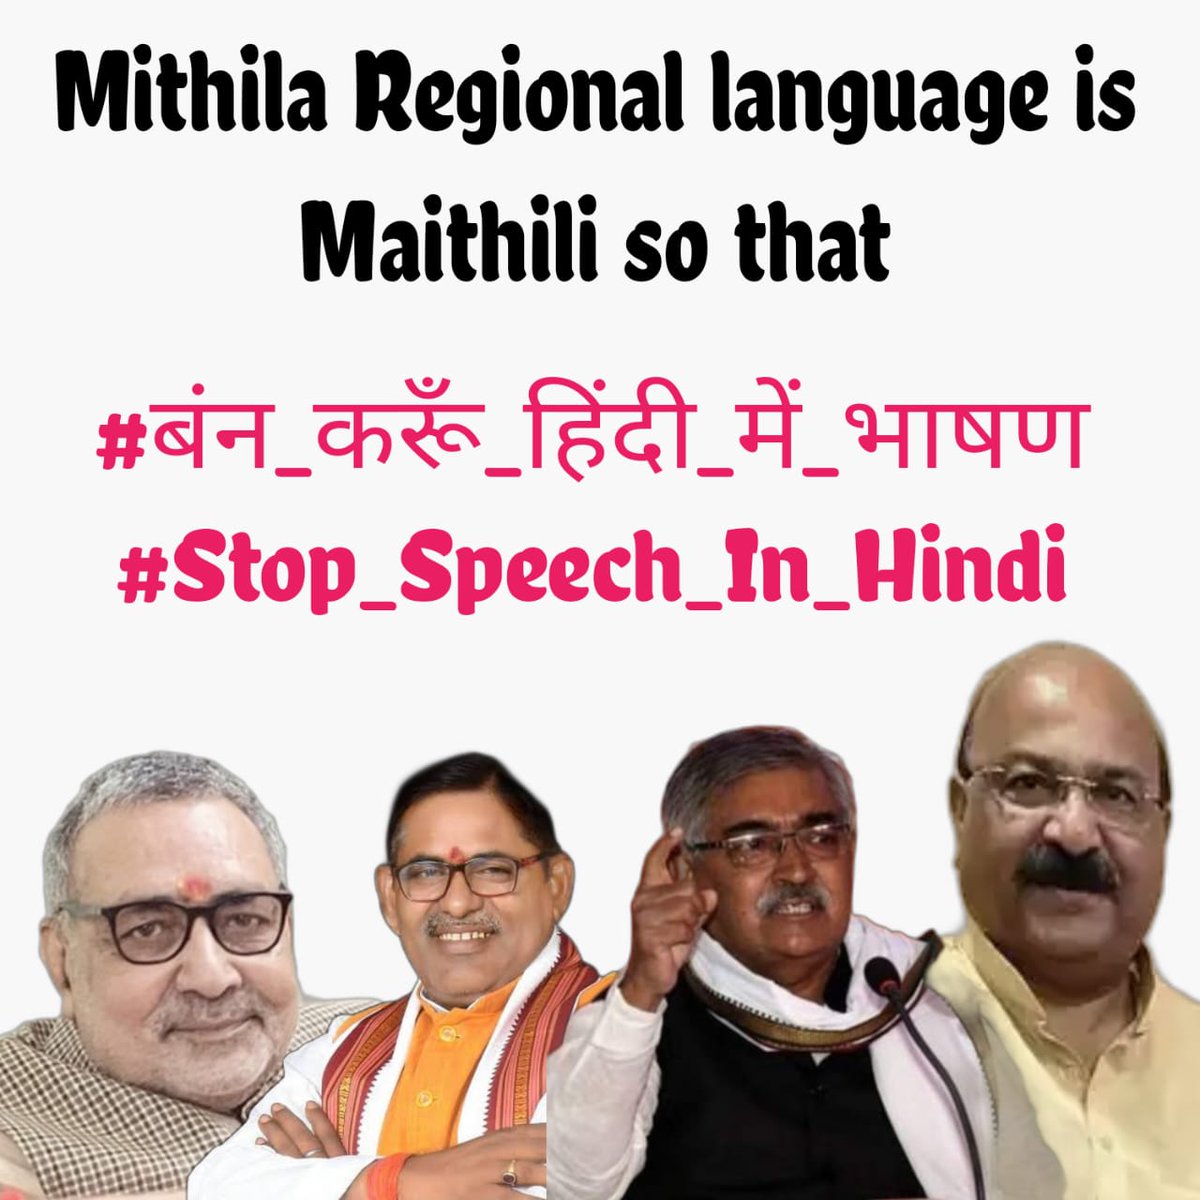 #Stop_Speech_In_Hindi